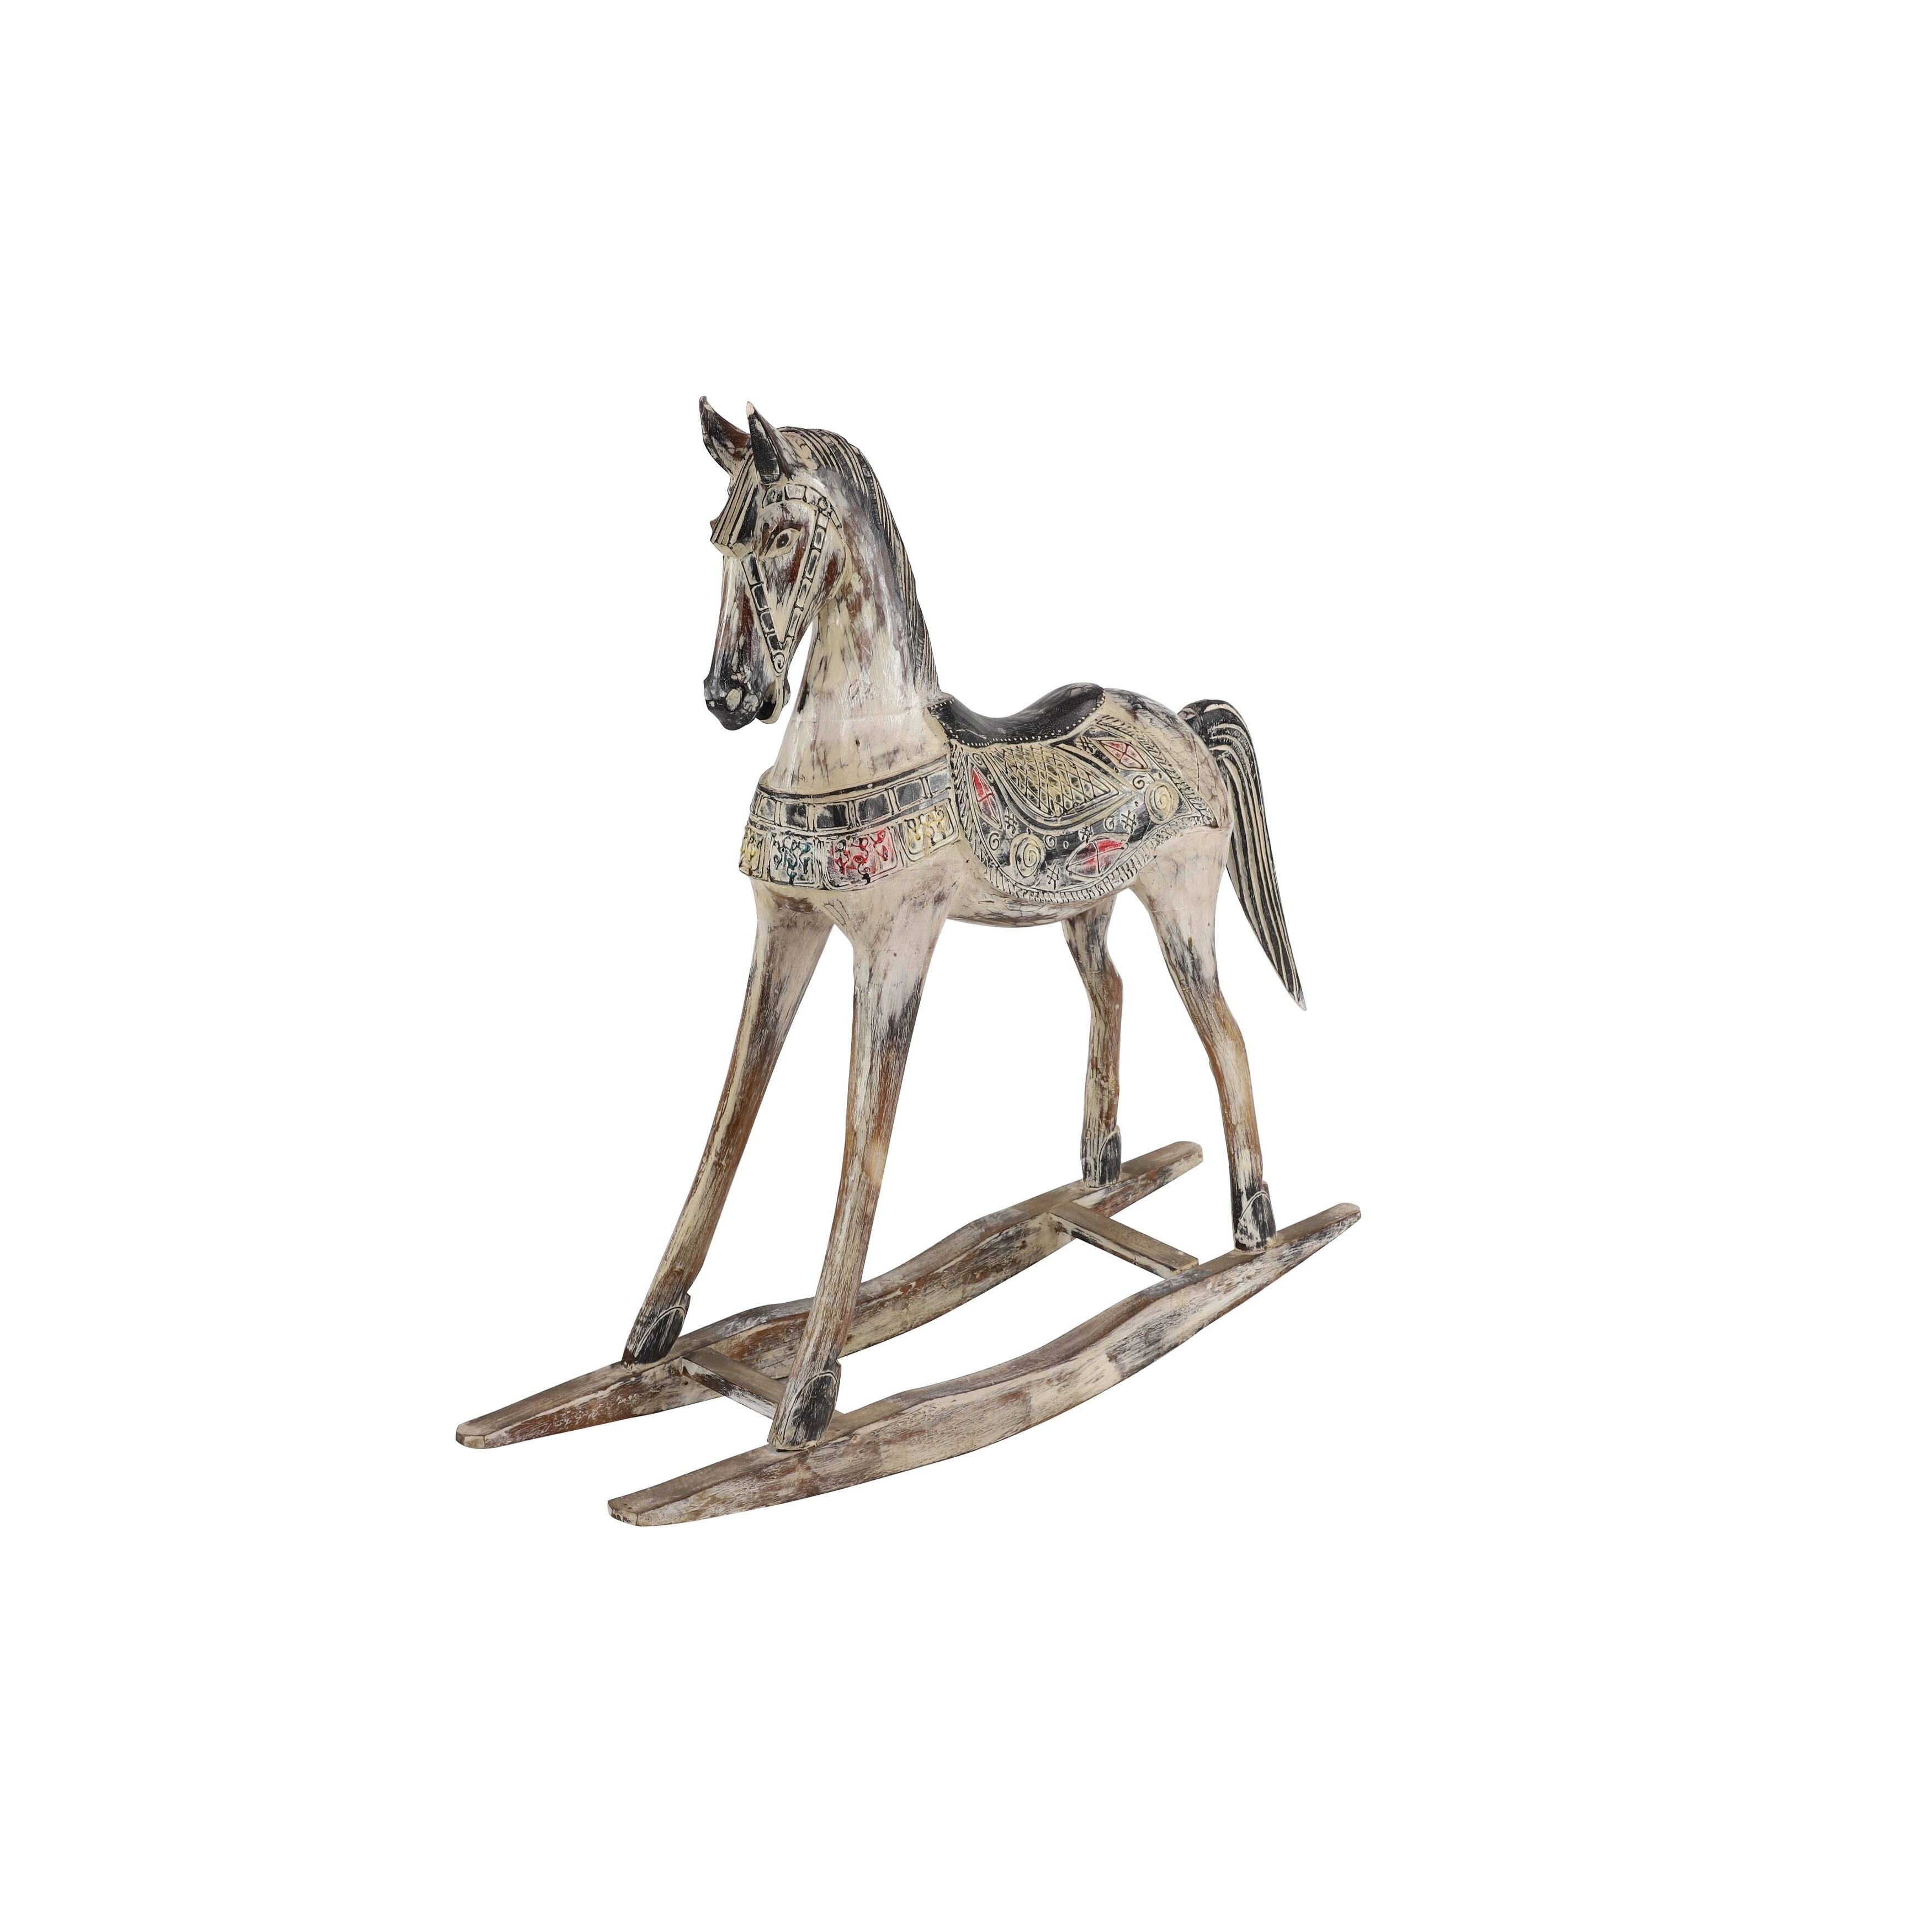 handmade wooden rocking horse